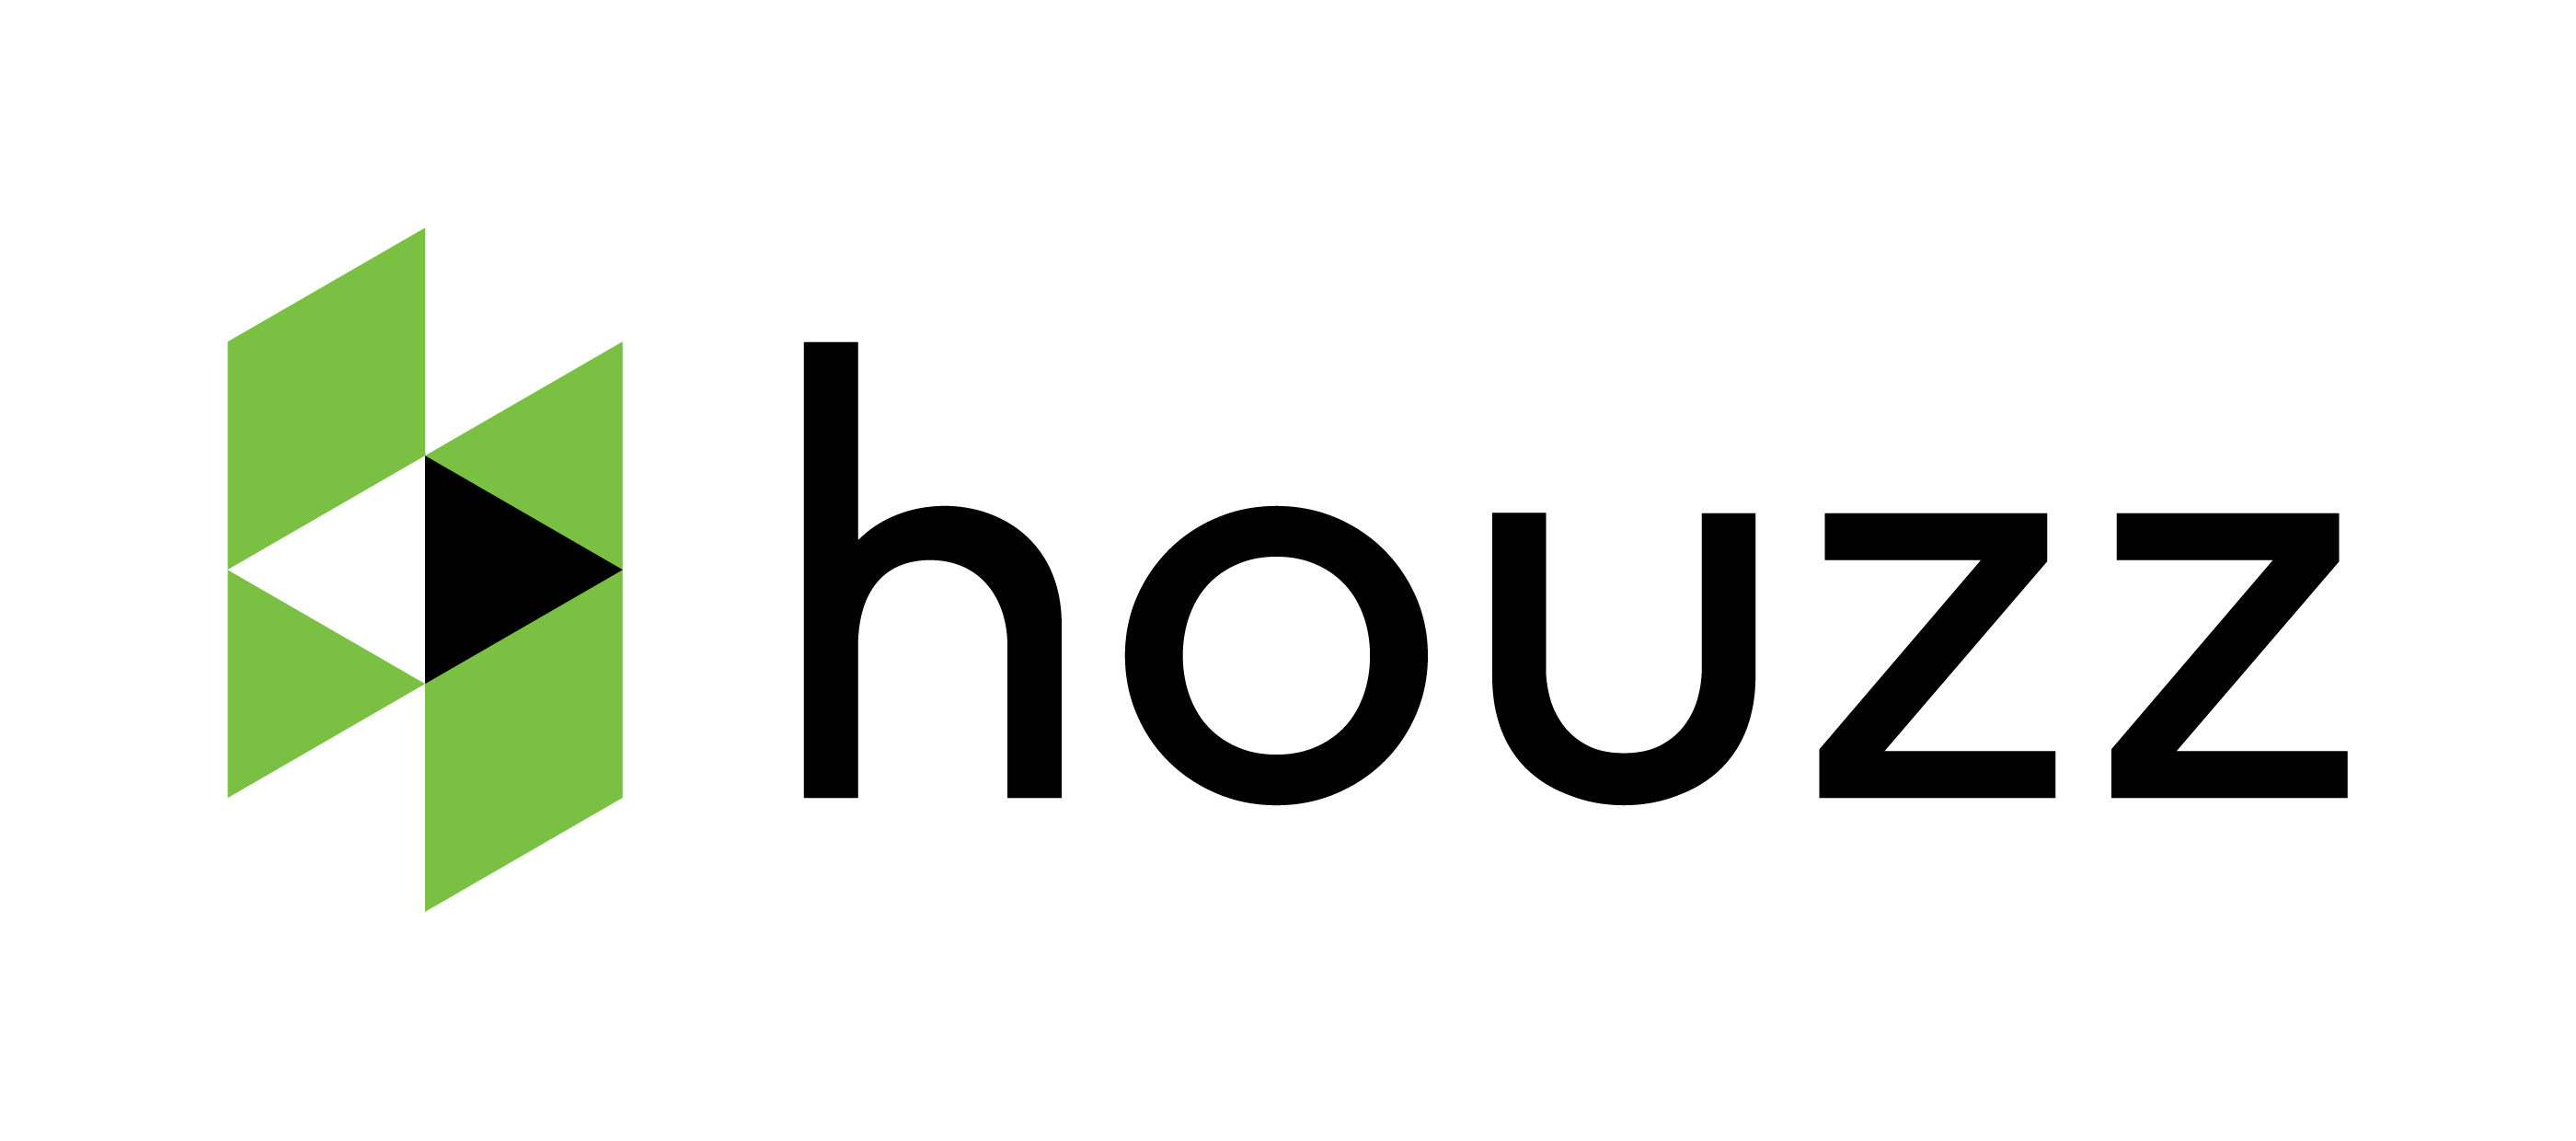 Houzz App Logo - Houzz PNG Transparent Houzz.PNG Images. | PlusPNG